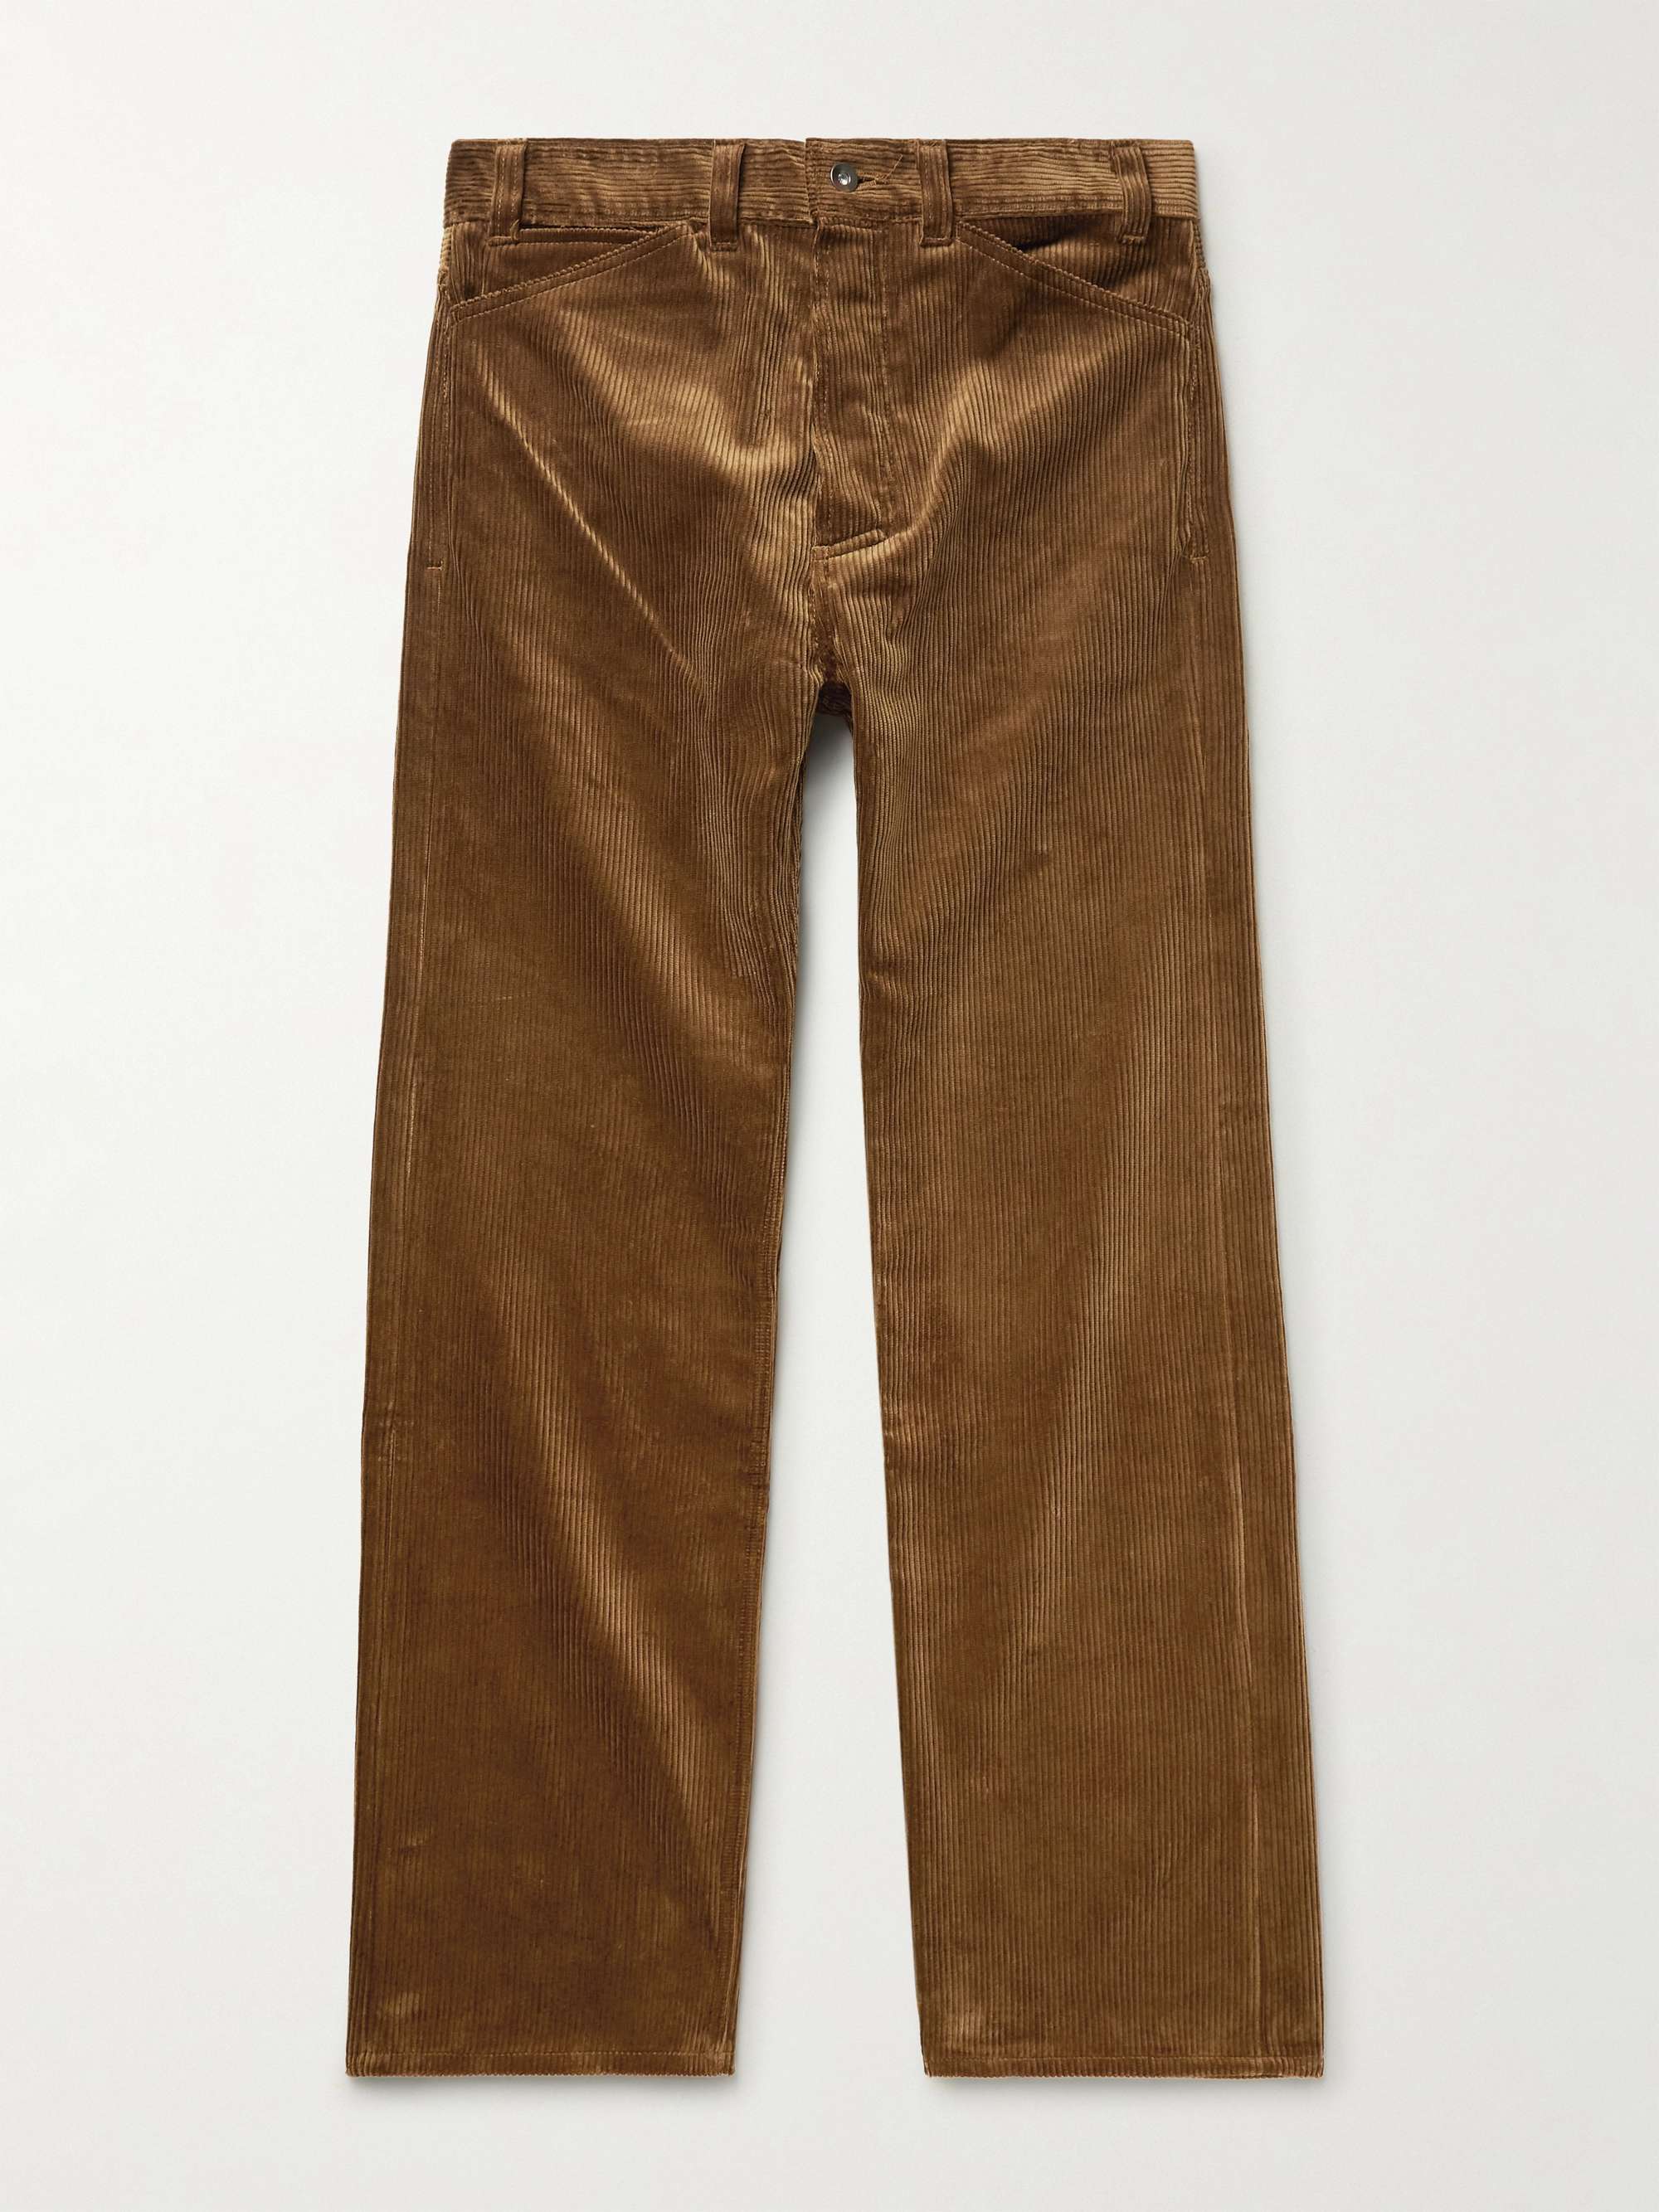 quality cotton cord trousers 48 waist  29 & 31 leg bnwt